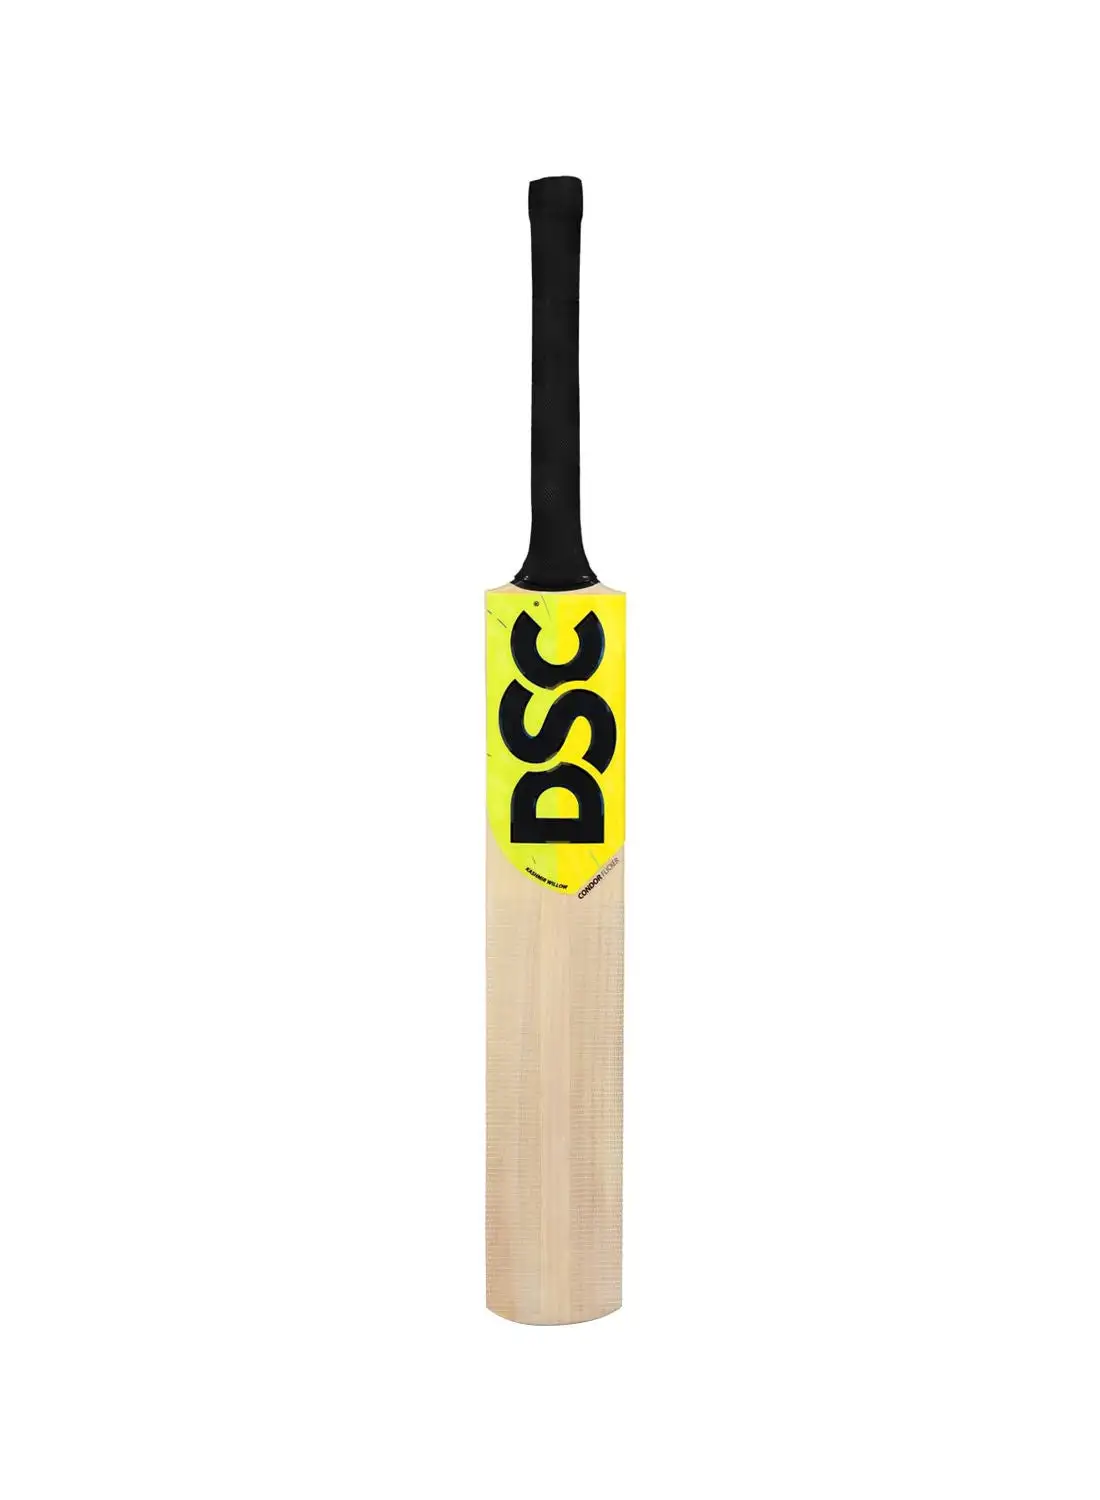 DSC Condor Flicker Kashmir Willow Cricket Bat Size 4